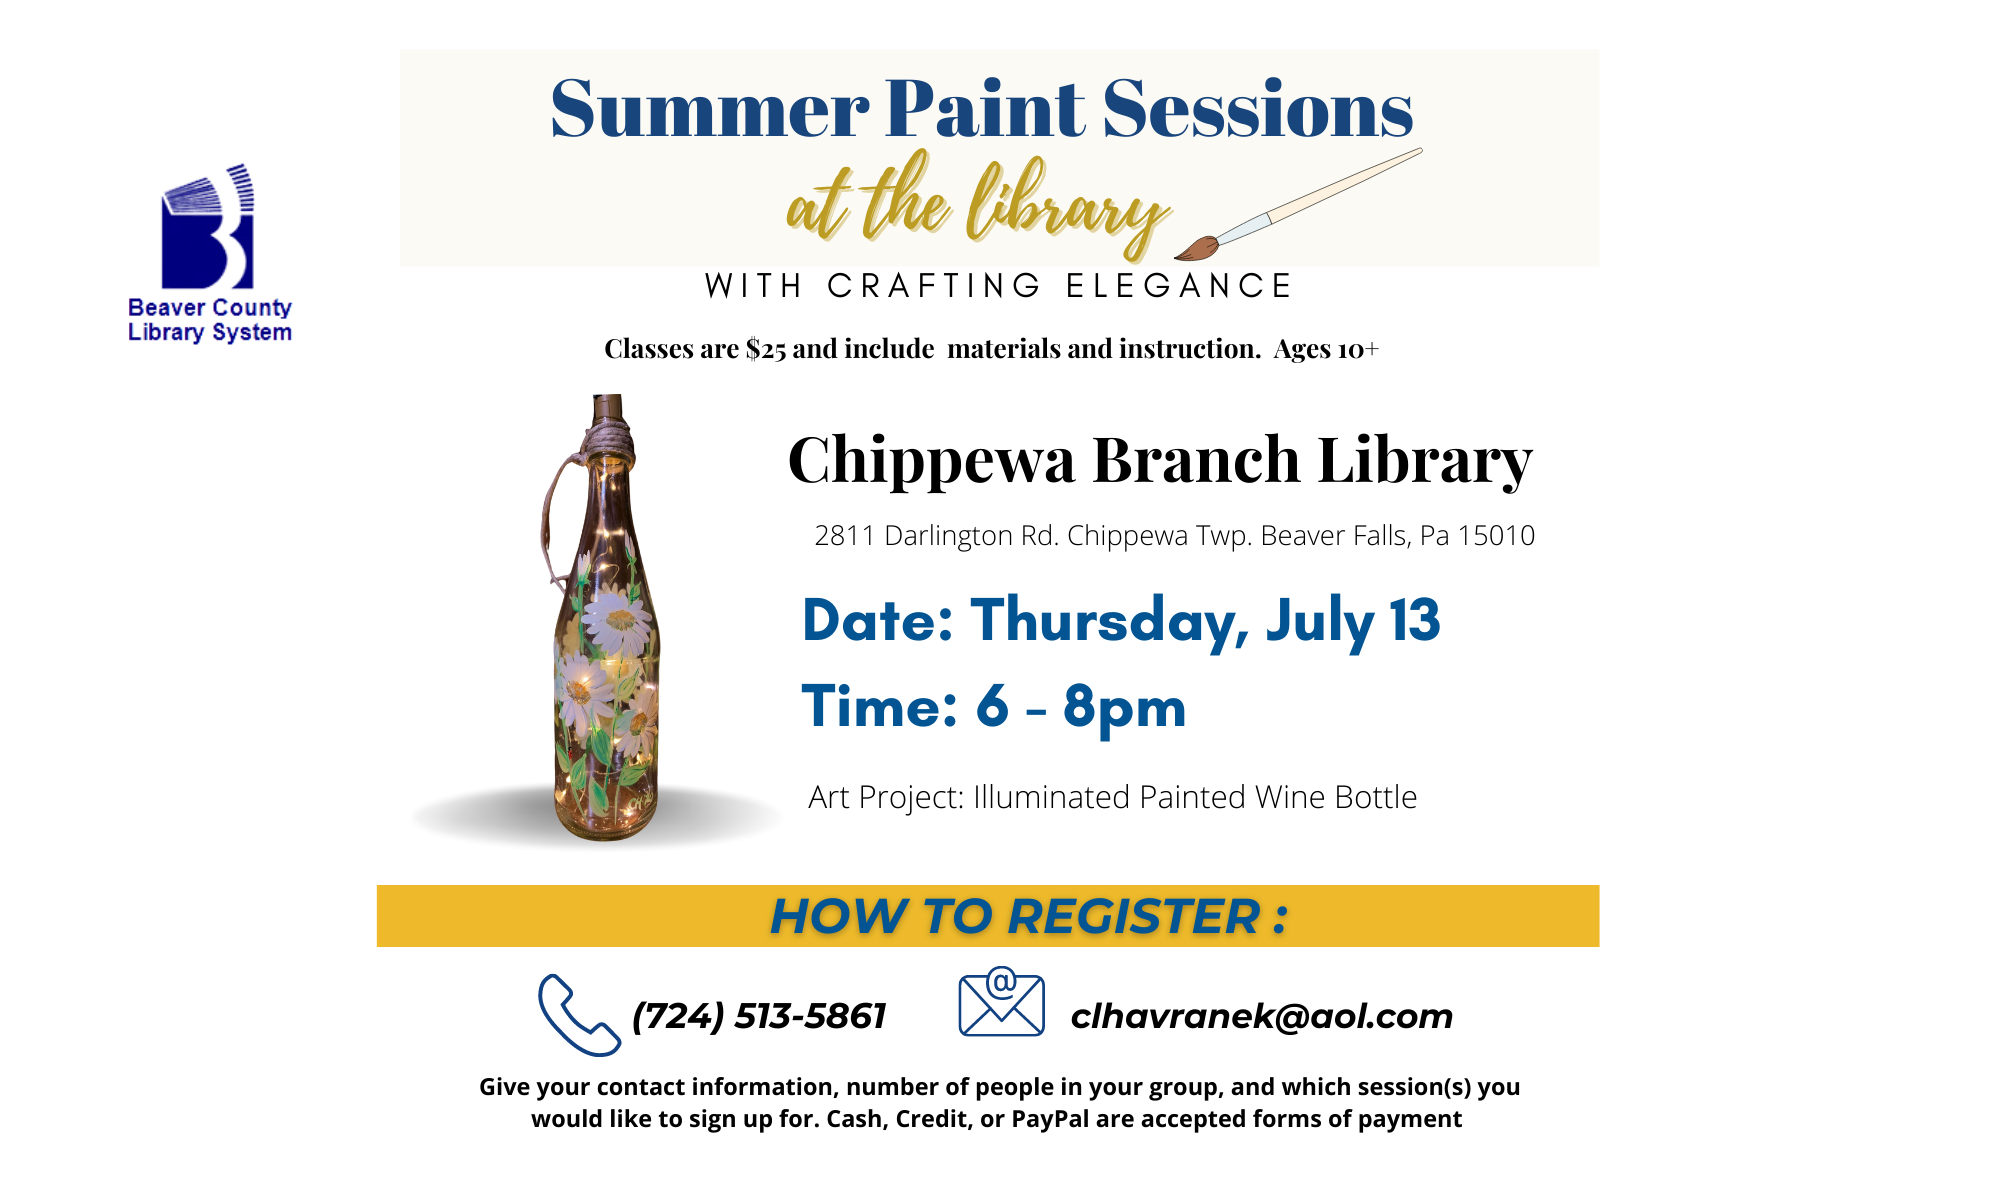 Summer Paint Sessions: Painted Illuminated Wine Bottle